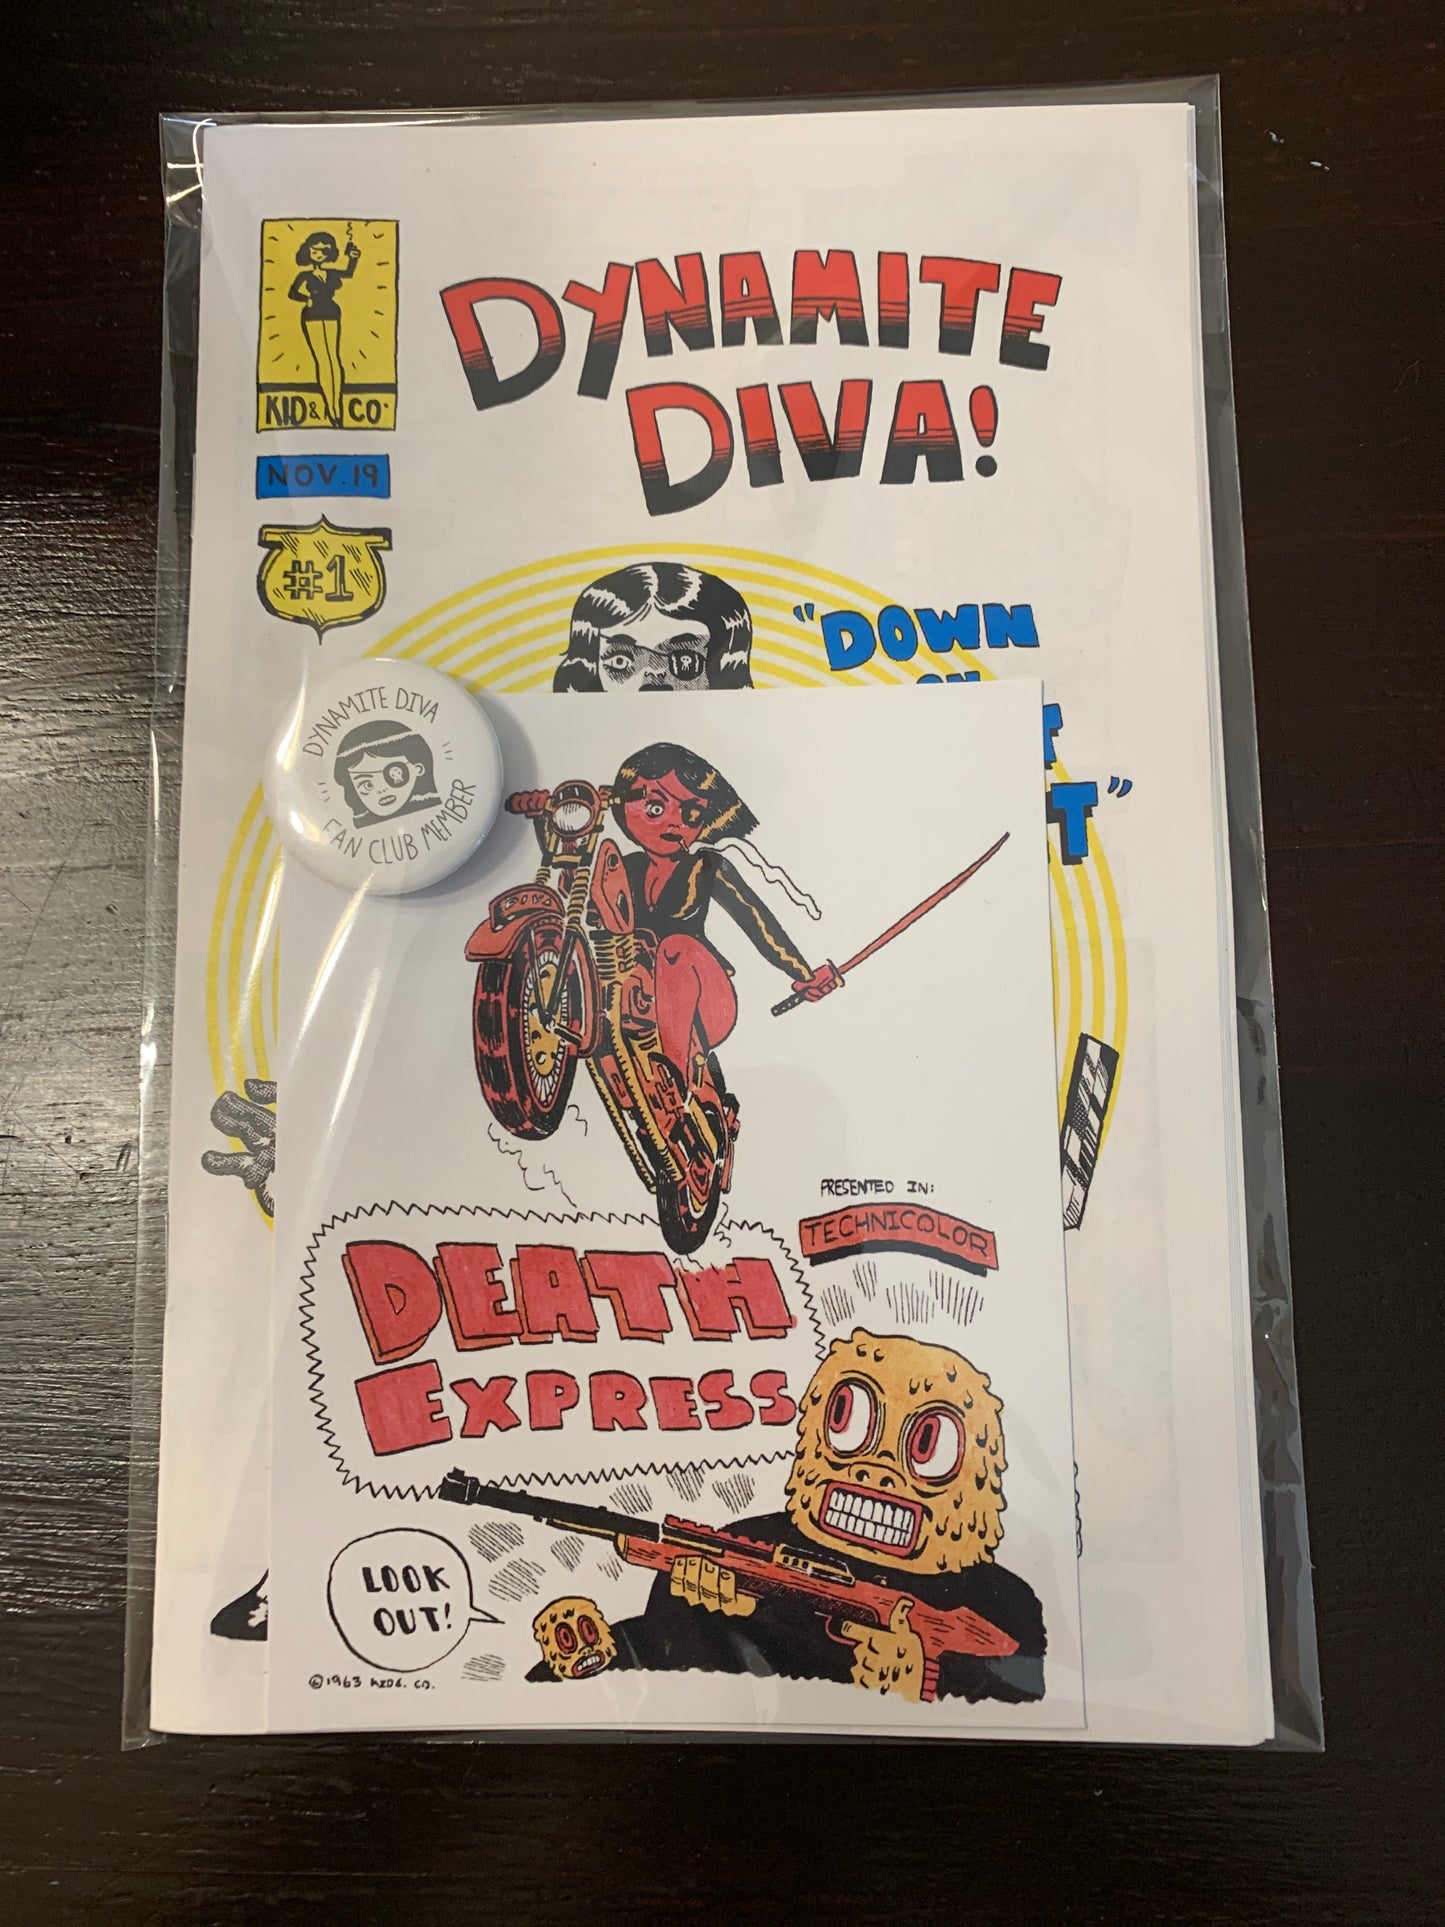 Dynamite Diva!